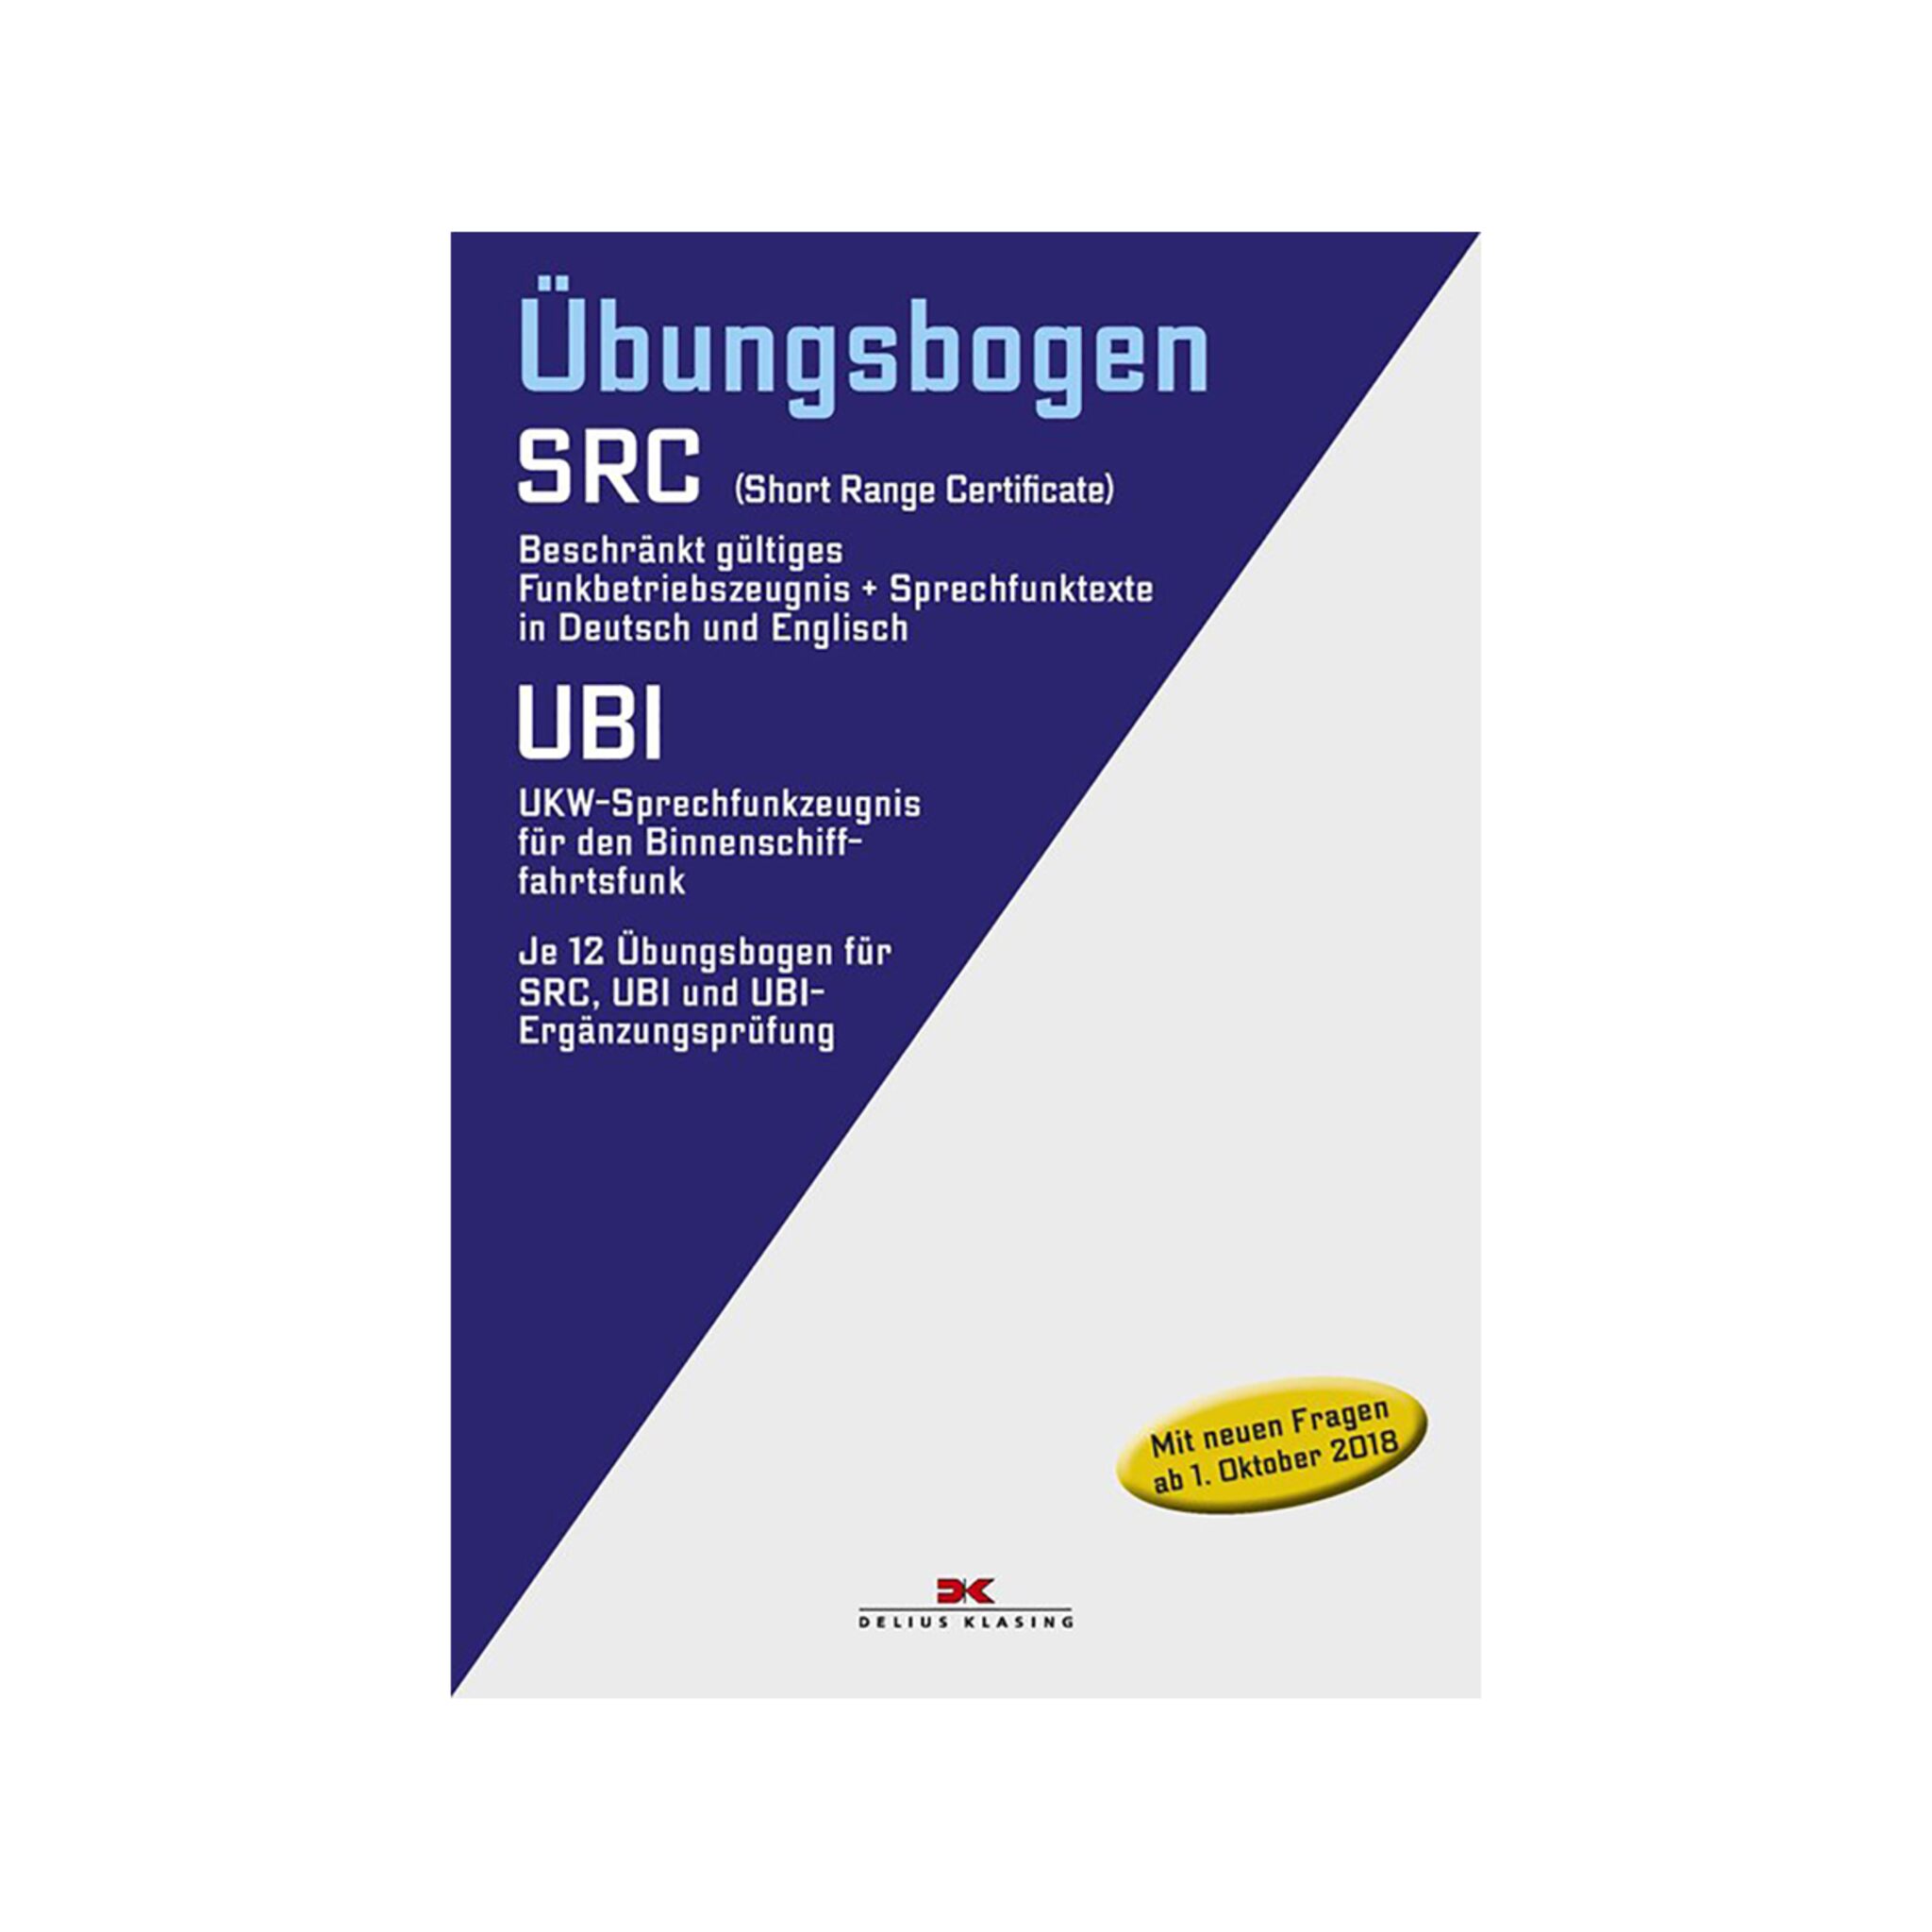 Delius Klasing Übungsbogen SRC und UBI